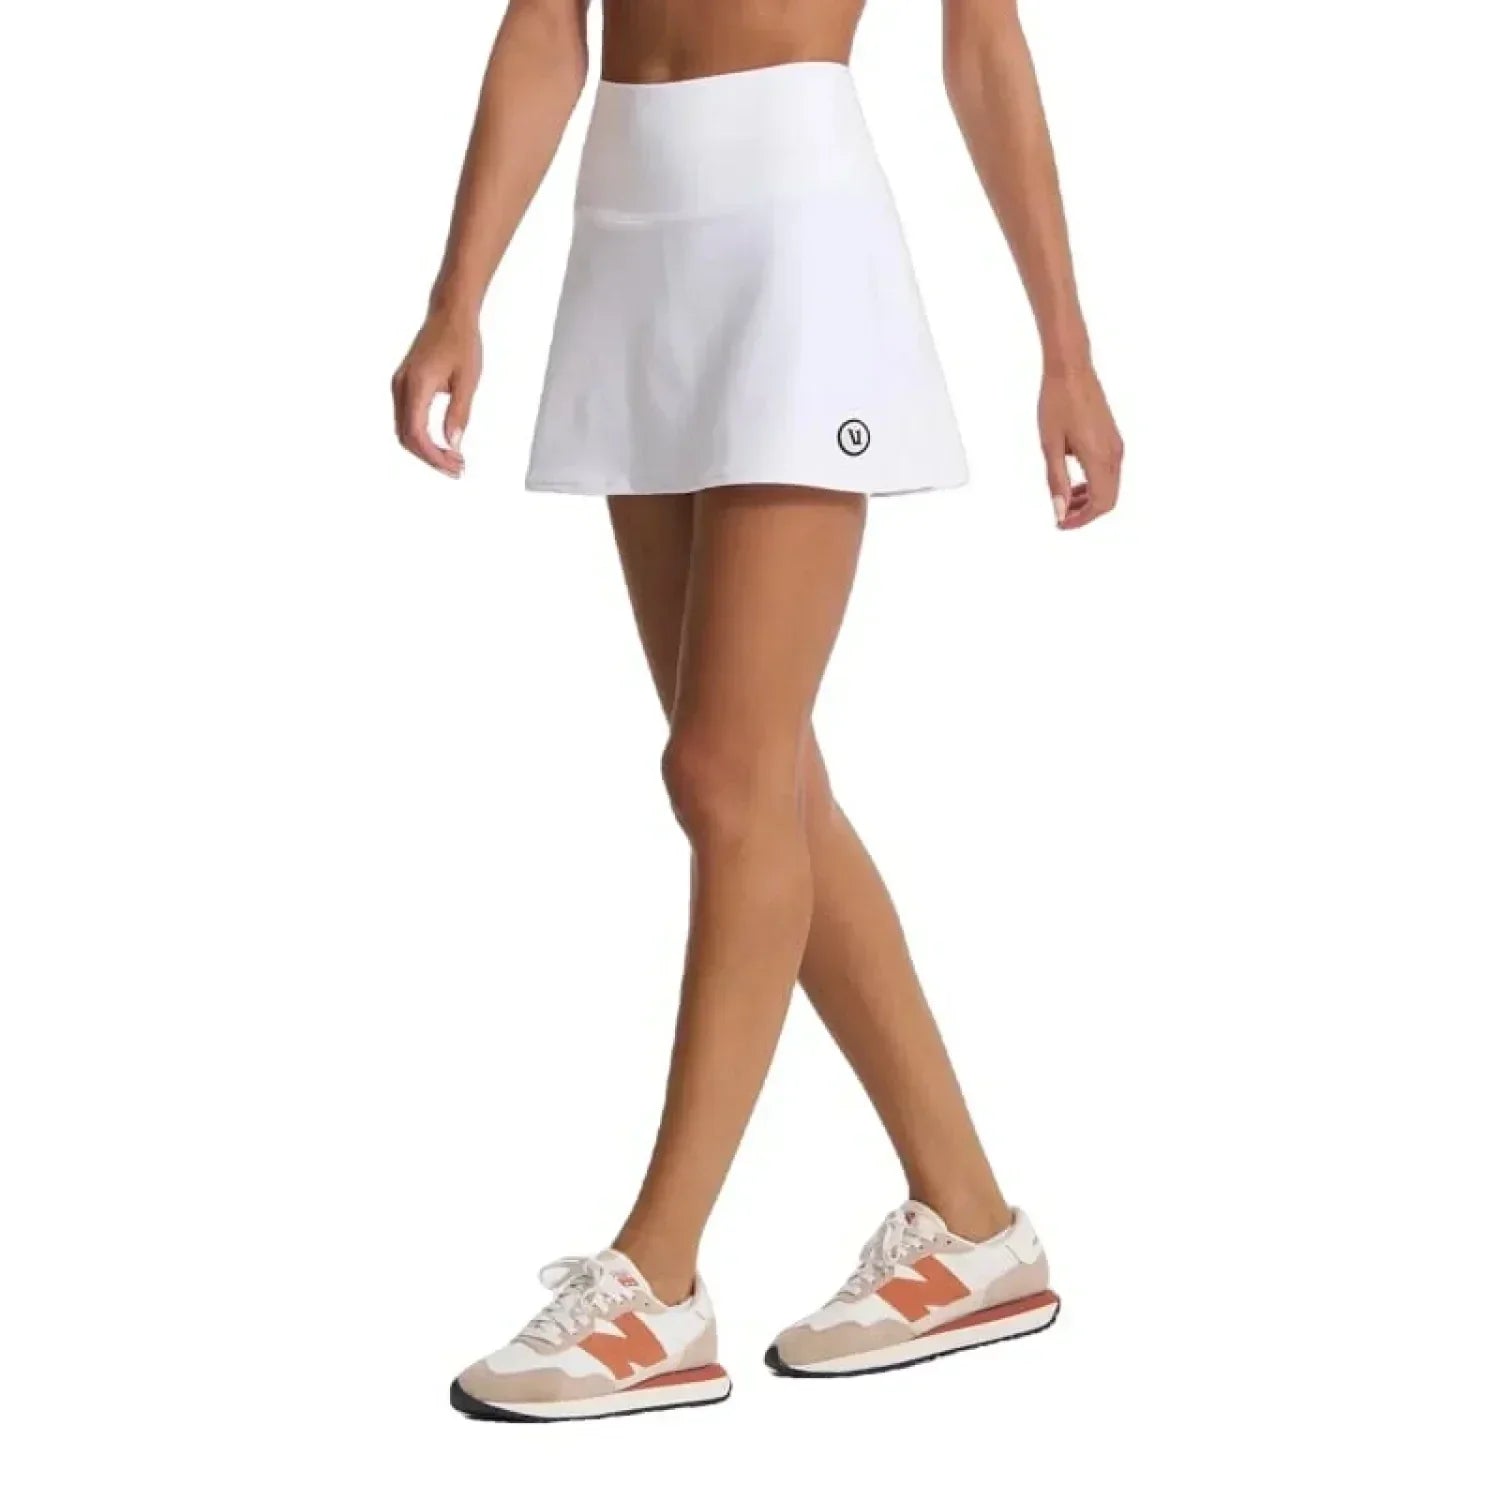 Vuori 02. WOMENS APPAREL - WOMENS DRESS|SKIRT - WOMENS SKIRT ACTIVE Women's Volley Skirt WHT WHITE